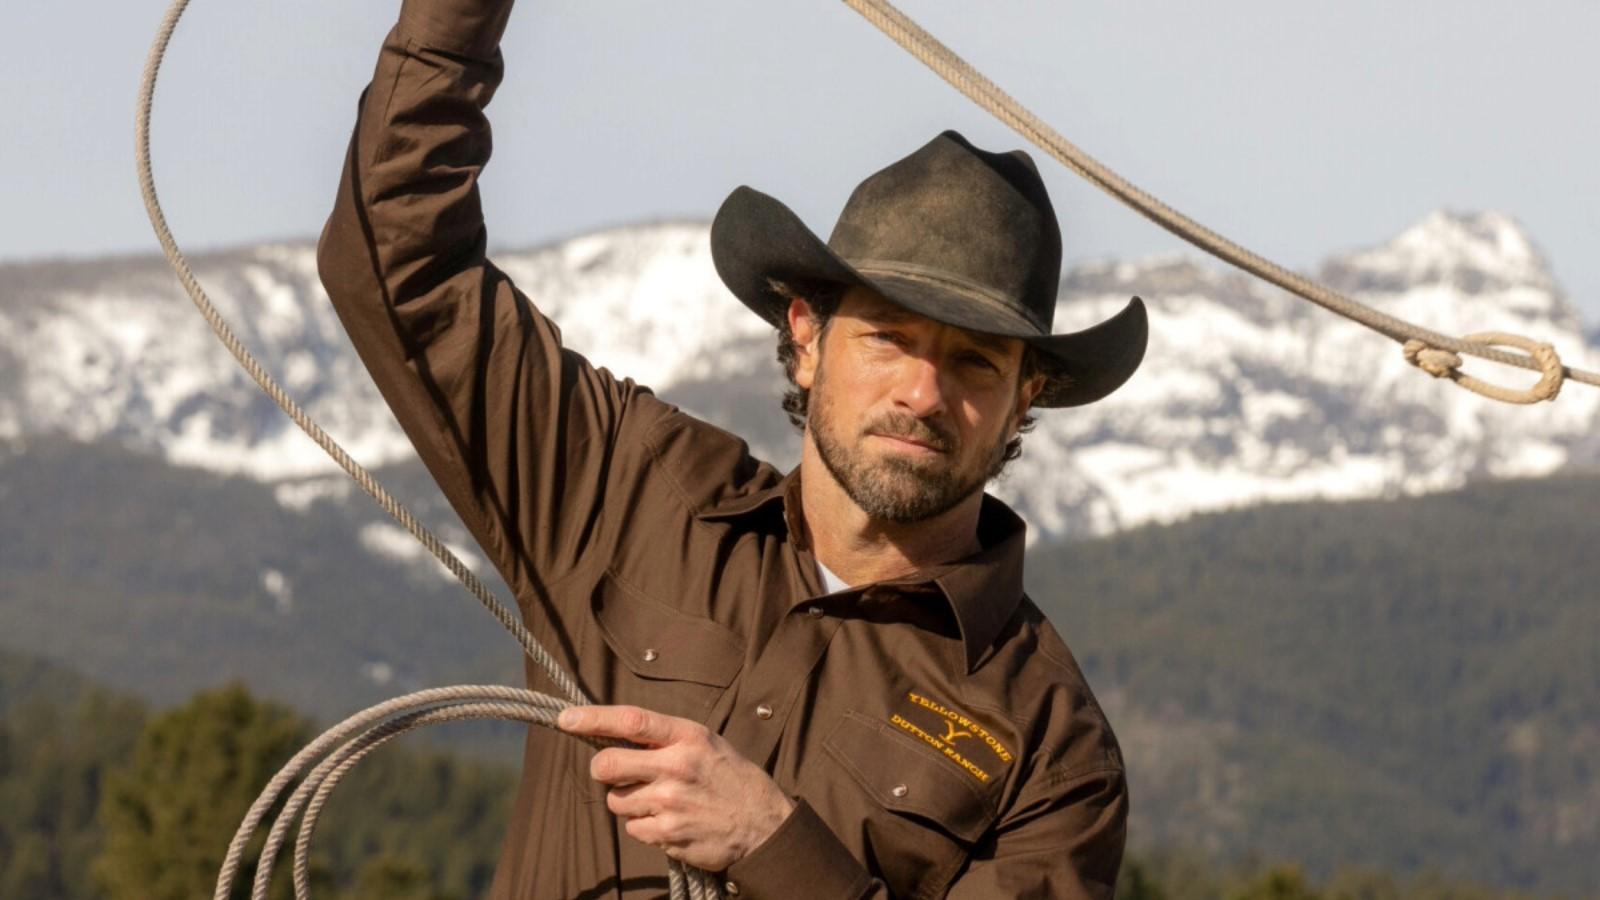 Ian Bohen as Ryan on Yellowstone, throwing a lasso